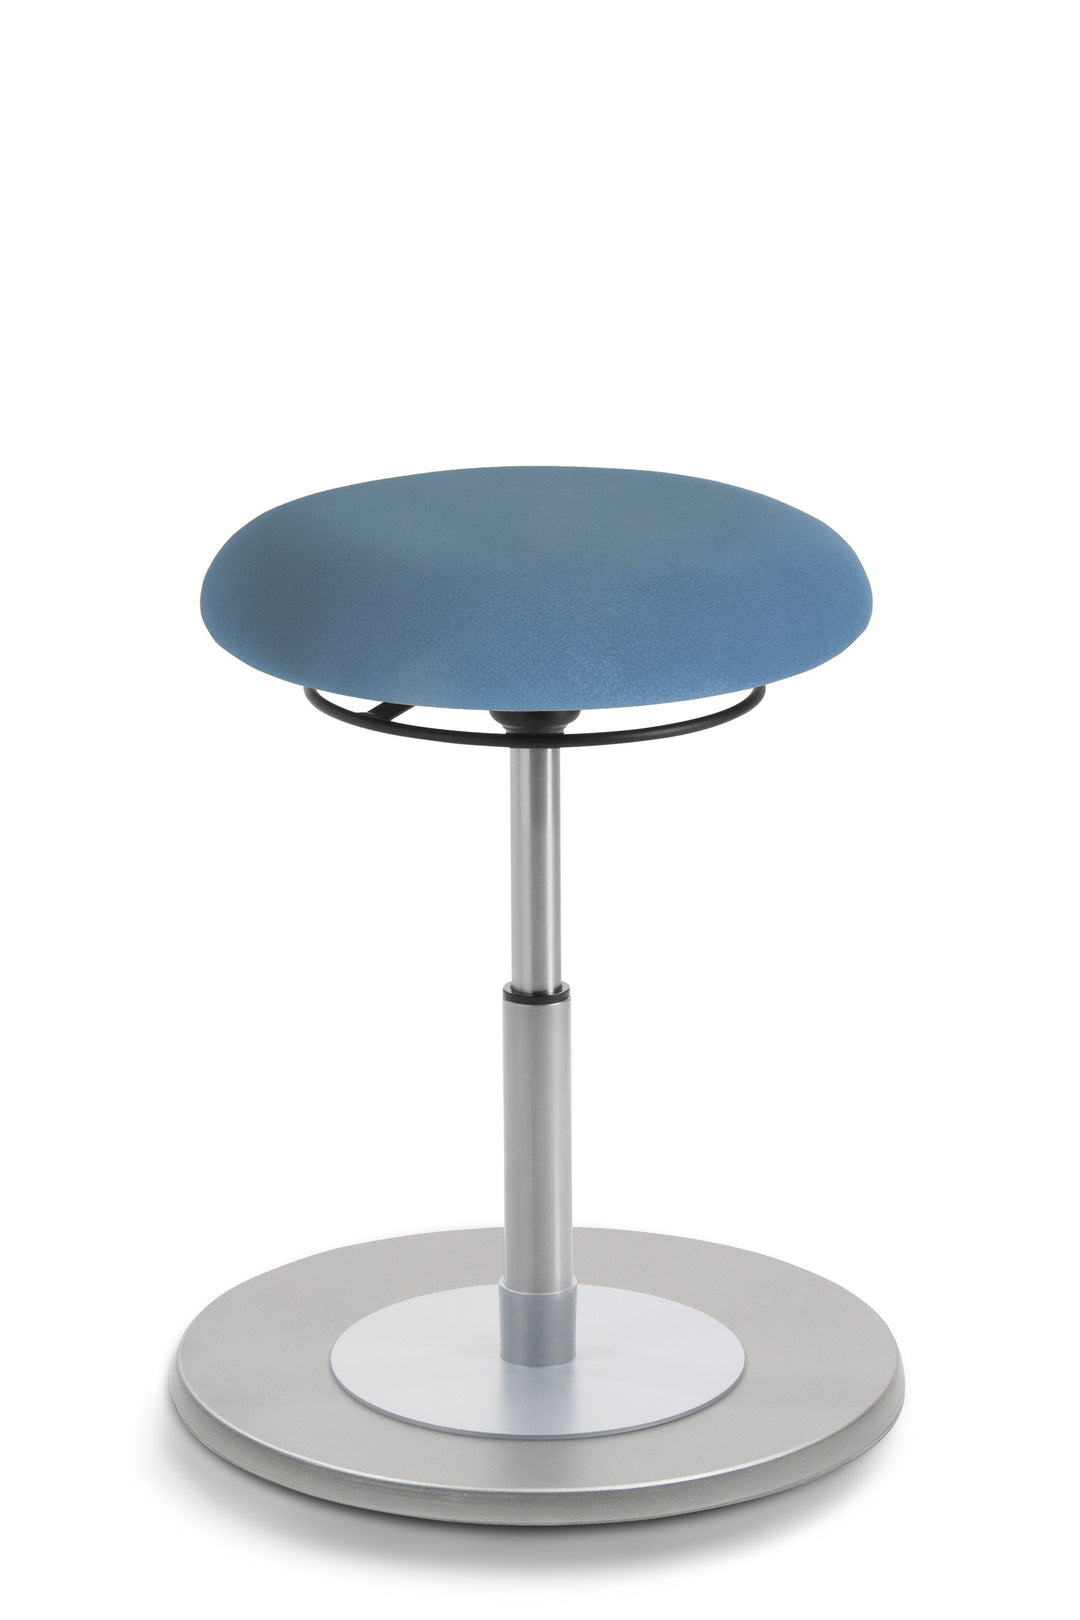 Mayer MyErgosit Taboret Krzesło Stołek balansujący okrągły 39-52cm podstawa srebrna 1151 EF